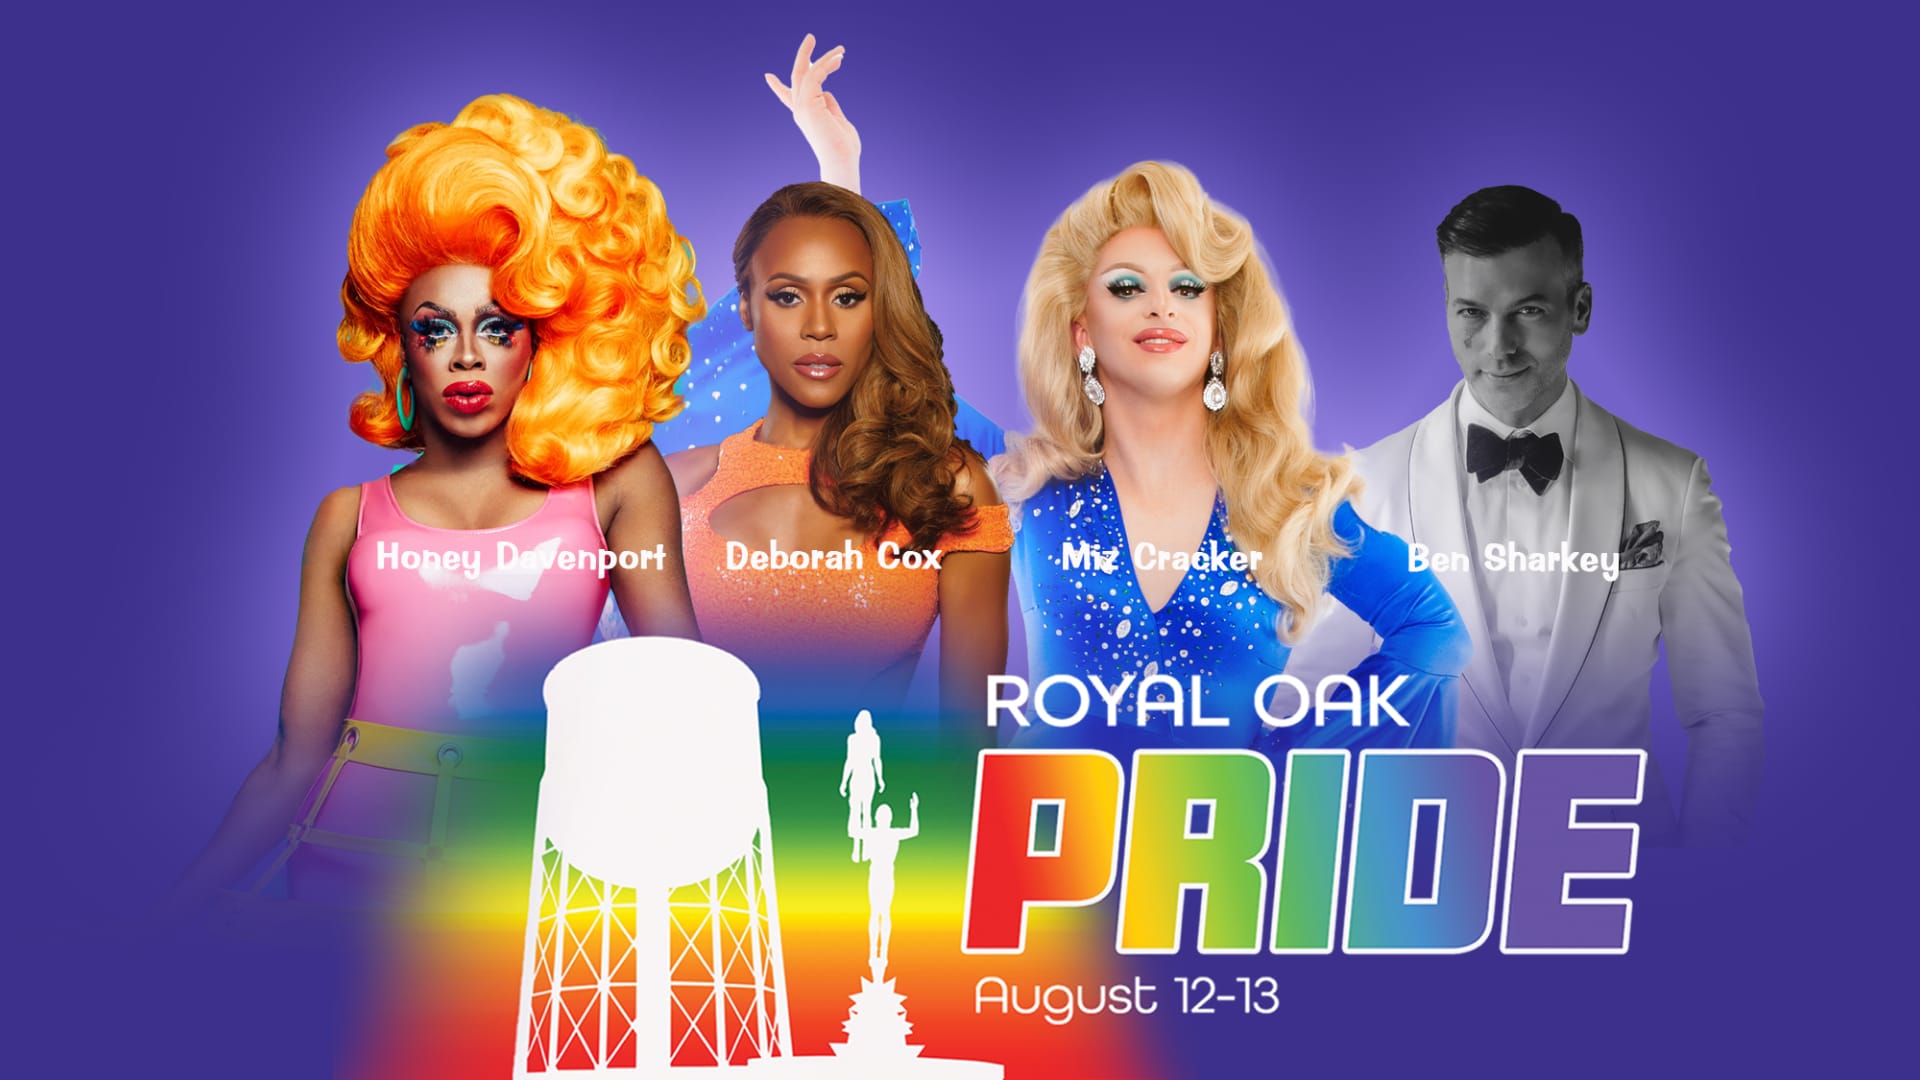 Royal Oak PRIDE, August 12-13 featuring Honey Davenport, Deborah Cox, Miz Cracker, and Ben Sharkey